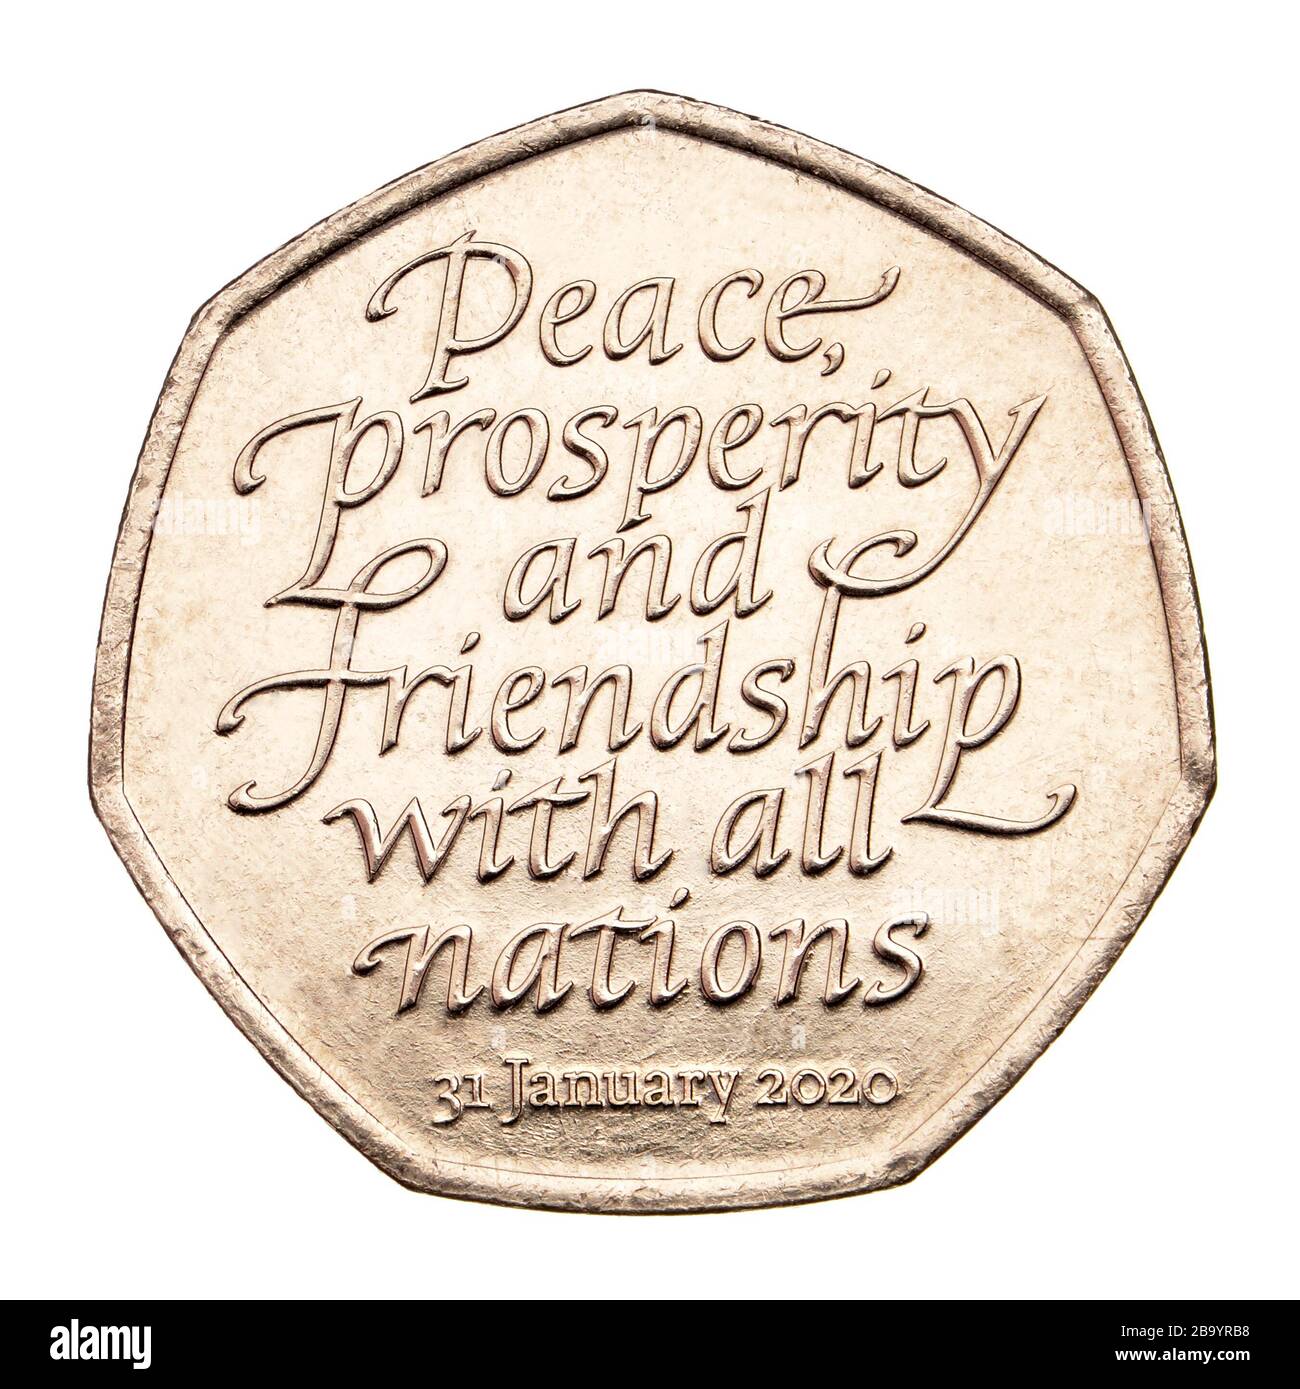 British commemorative 50p coin. Brexit - Britain leaving the European Union 31st January 2020 Stock Photo